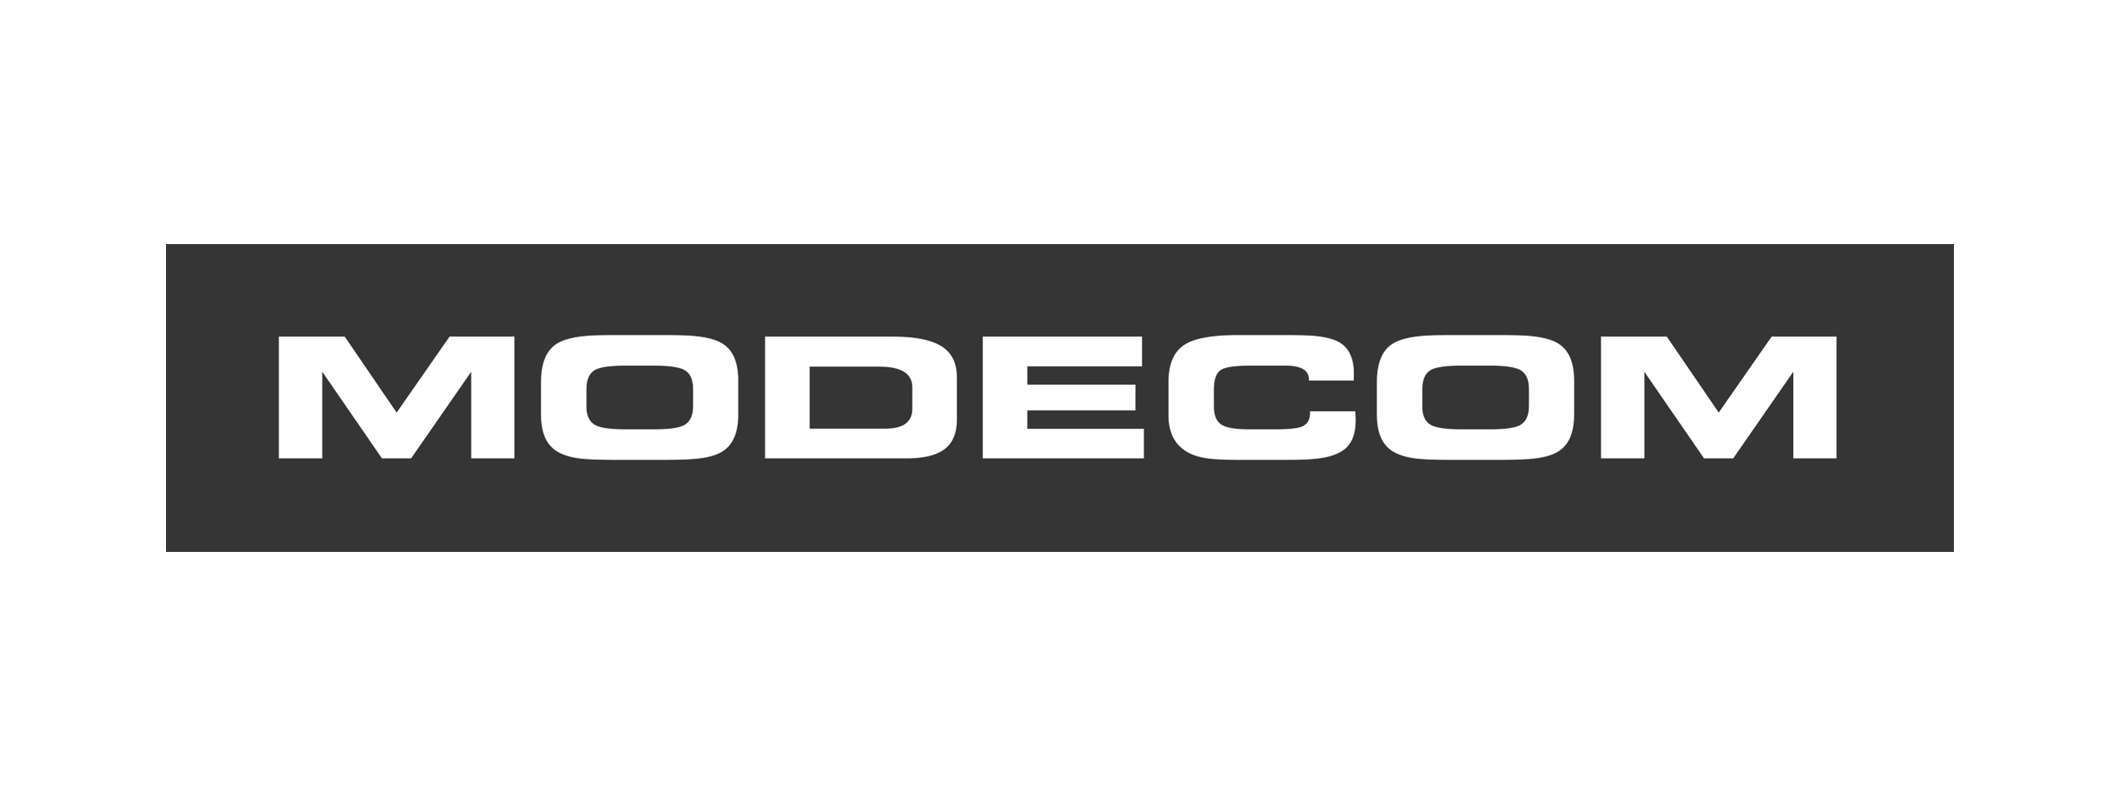 modecom_logo_BW3